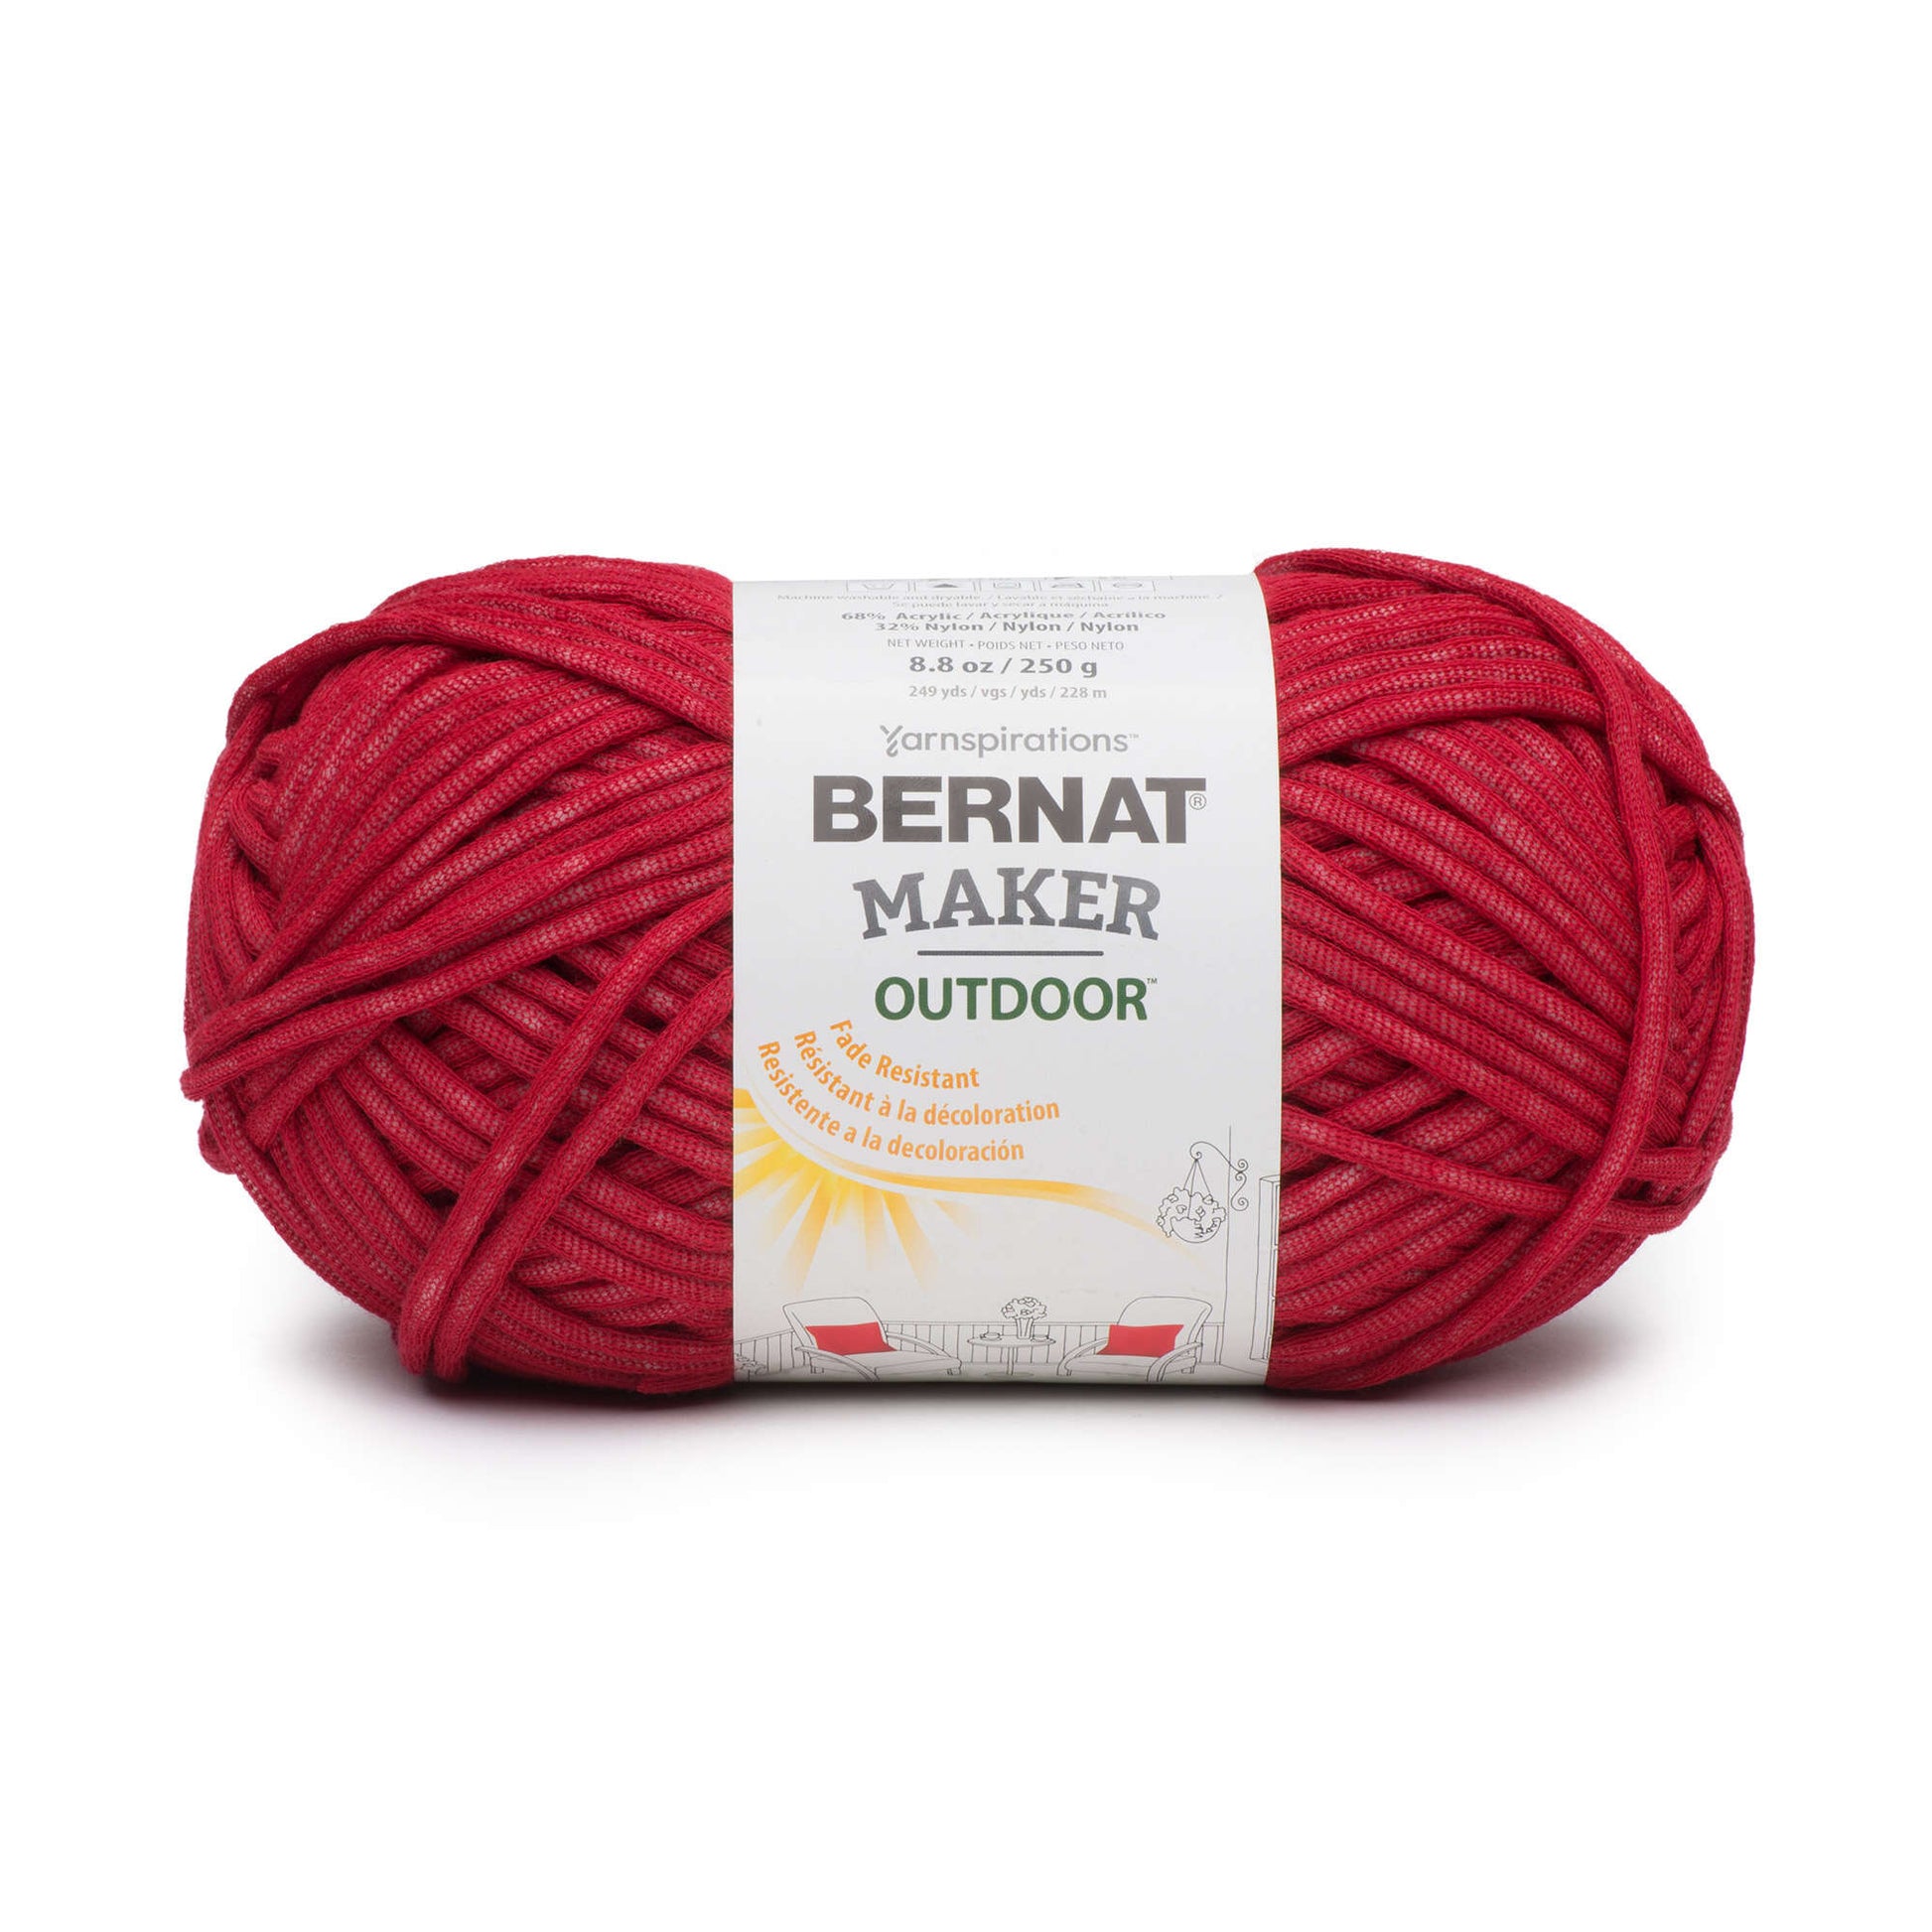 Bernat Maker Home Outdoor Yarn - Discontinued